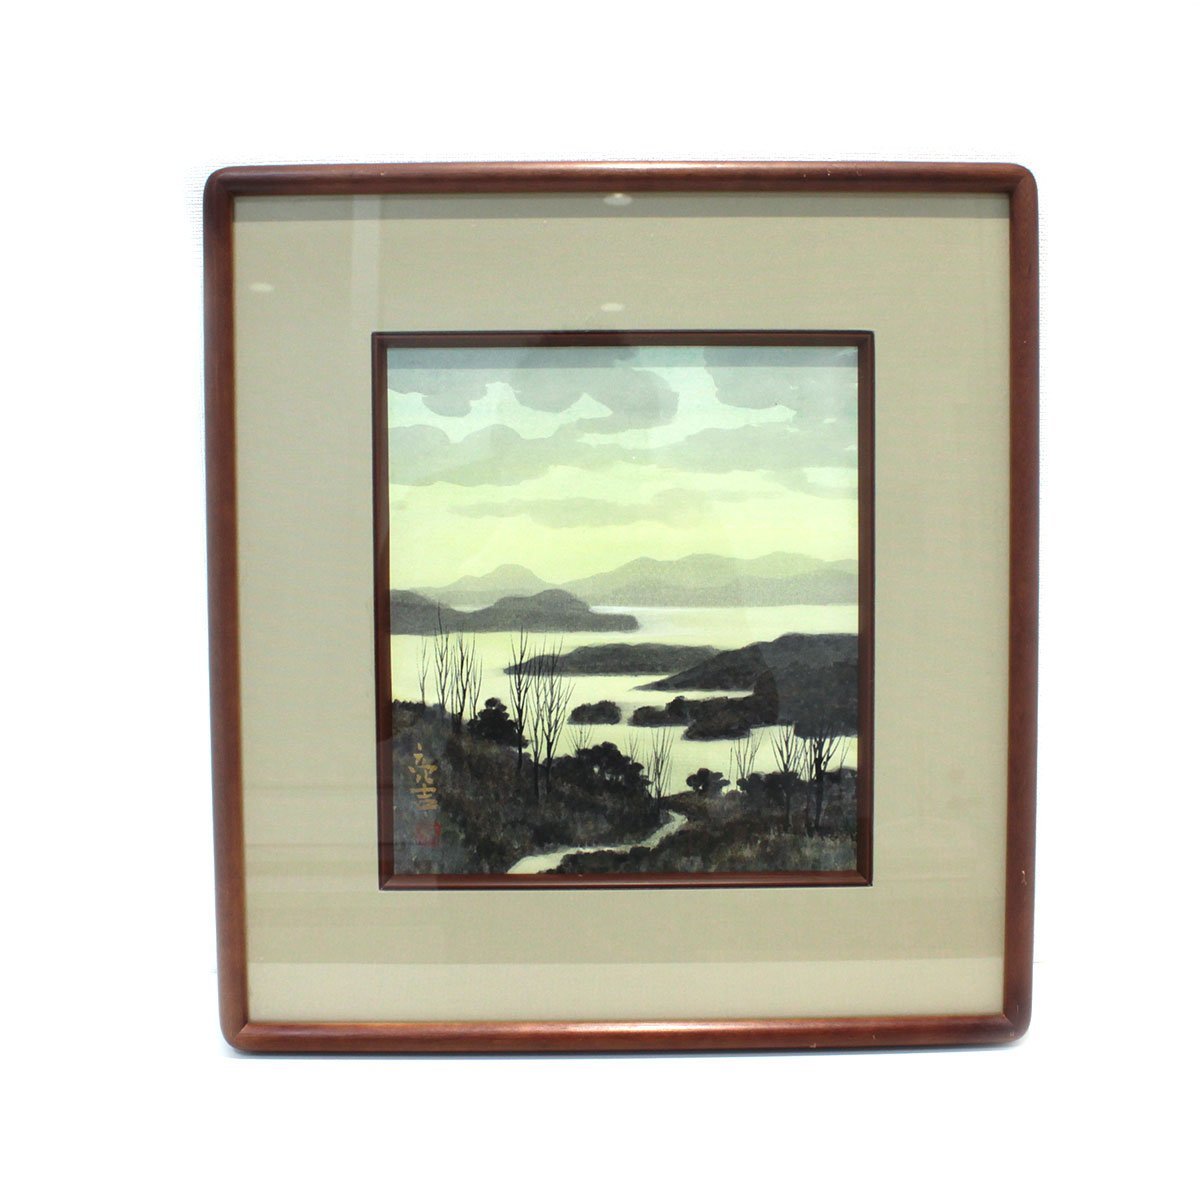 Morning at Lake Yukawa by Ryokichi Miyazaki, landscape painting, frame included, shipping 880 yen, Artwork, Prints, others